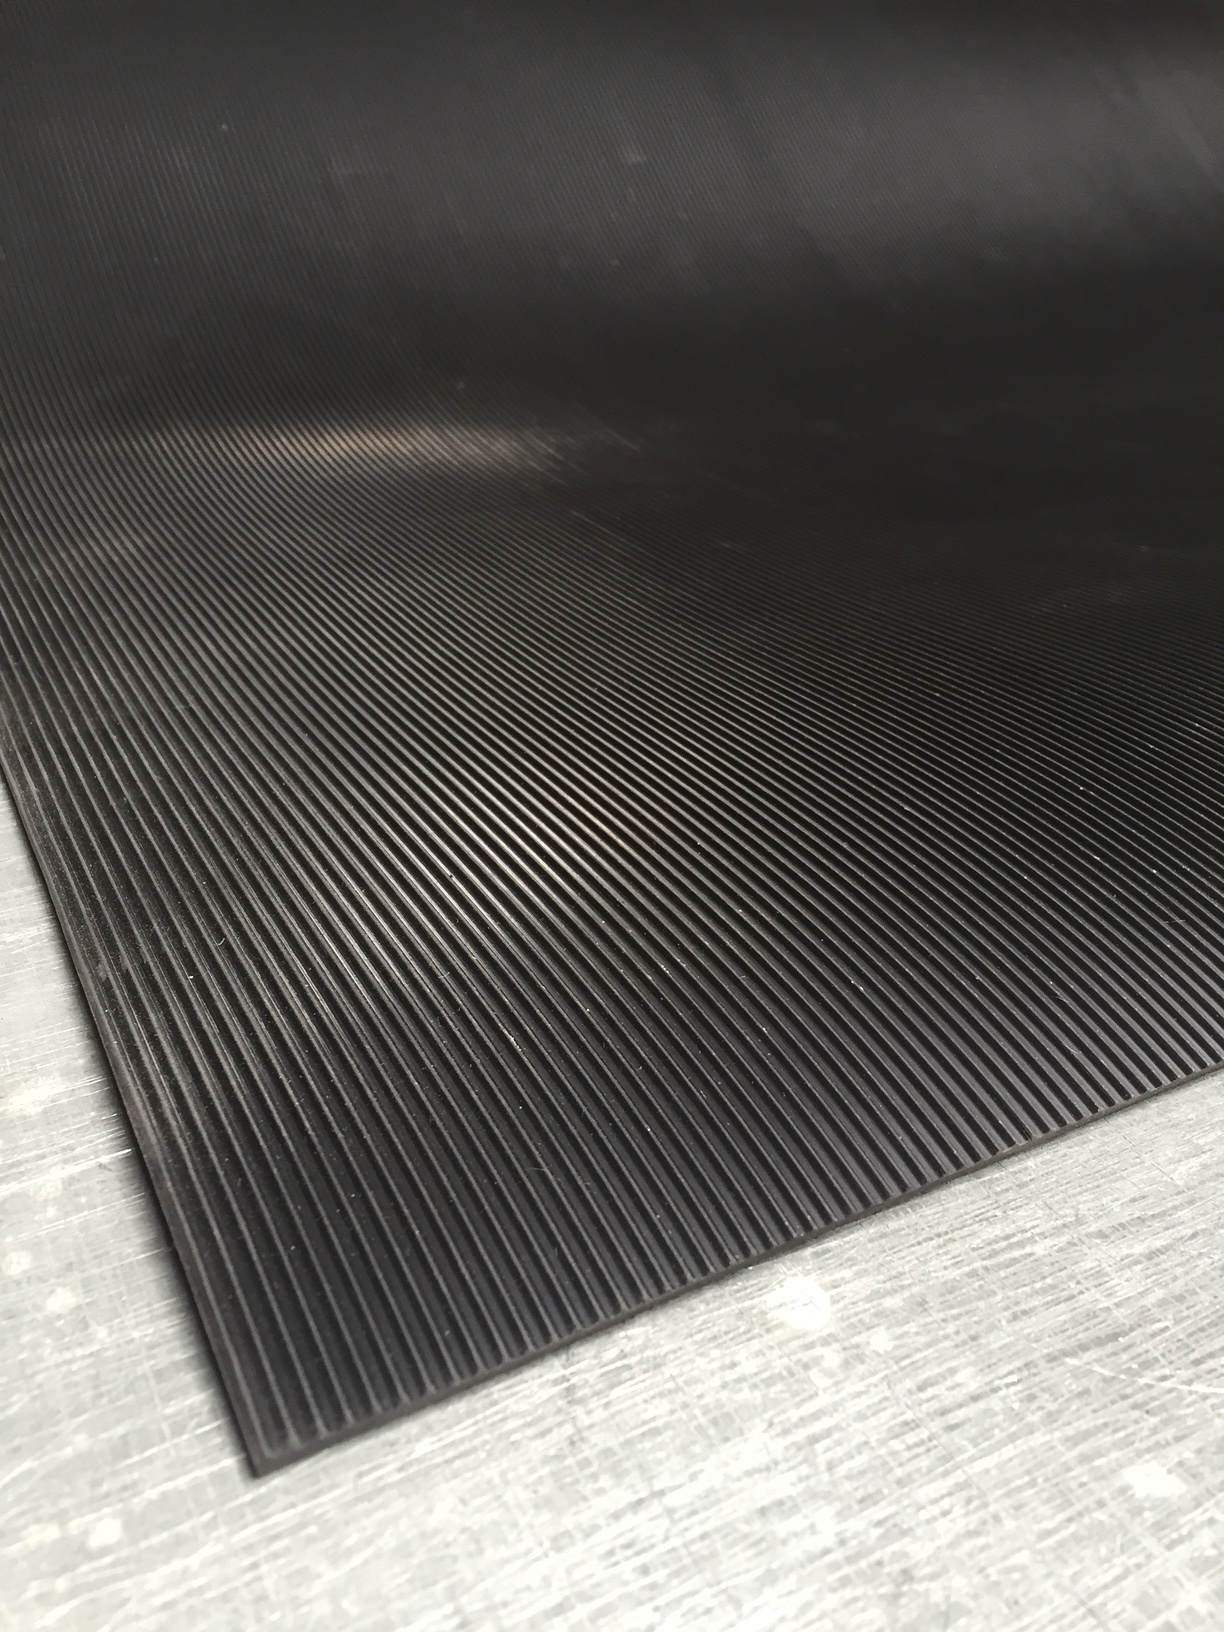 Heavy-Duty Corrugated Runner Matting – All Rubber